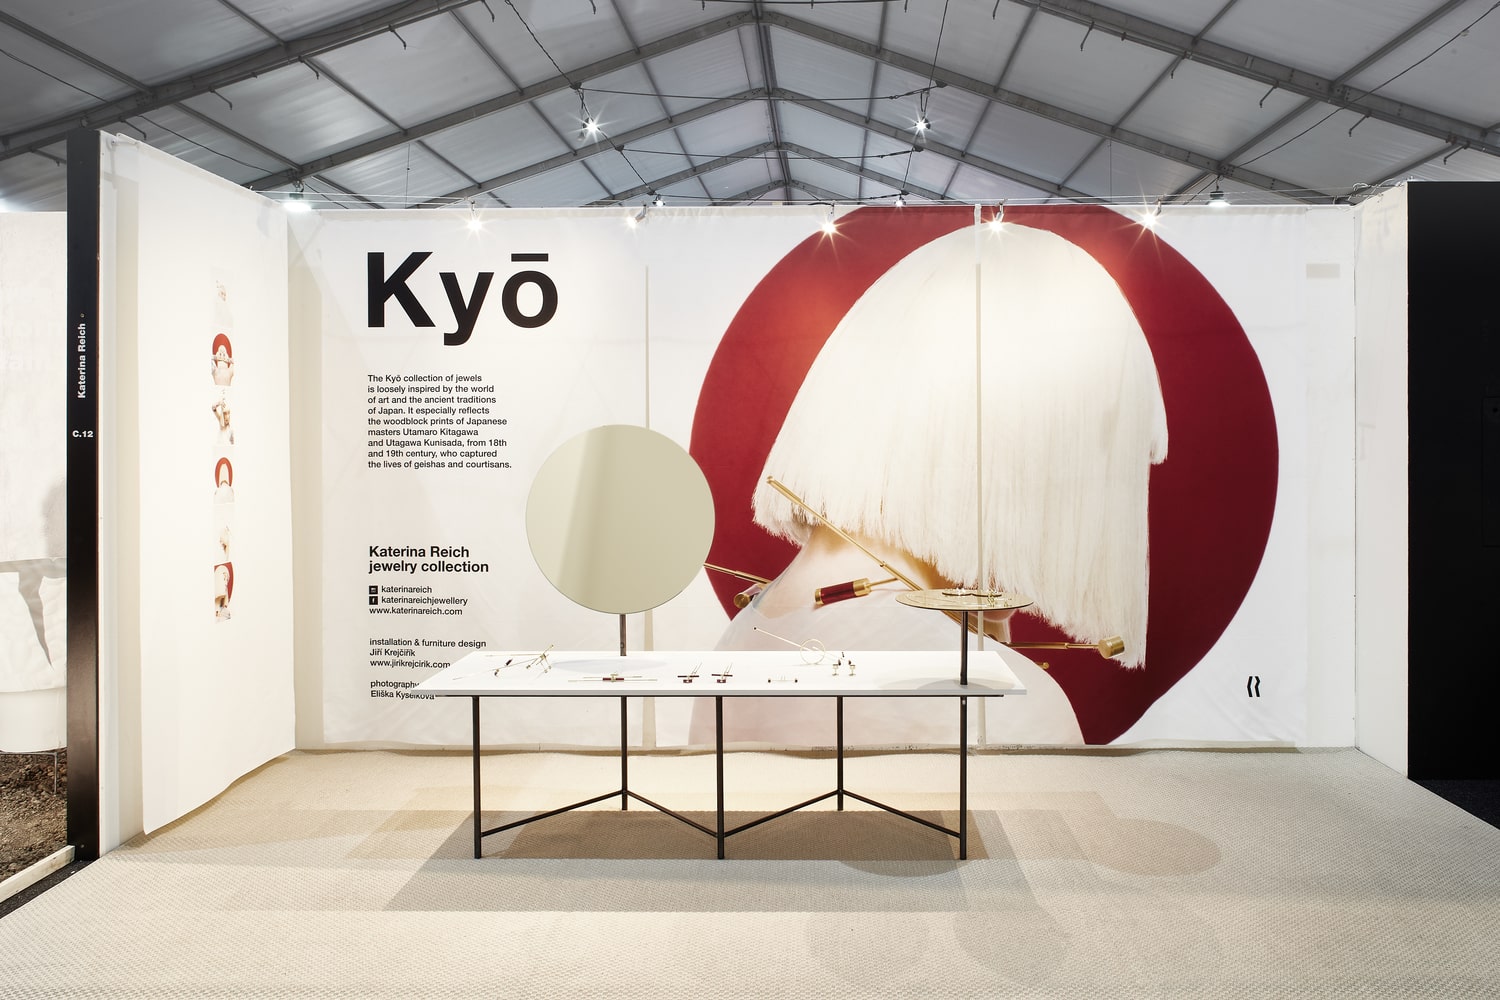 The Kyō collection of jewelry at Designblok 2018 by award winning designer Jiri Krejcirik